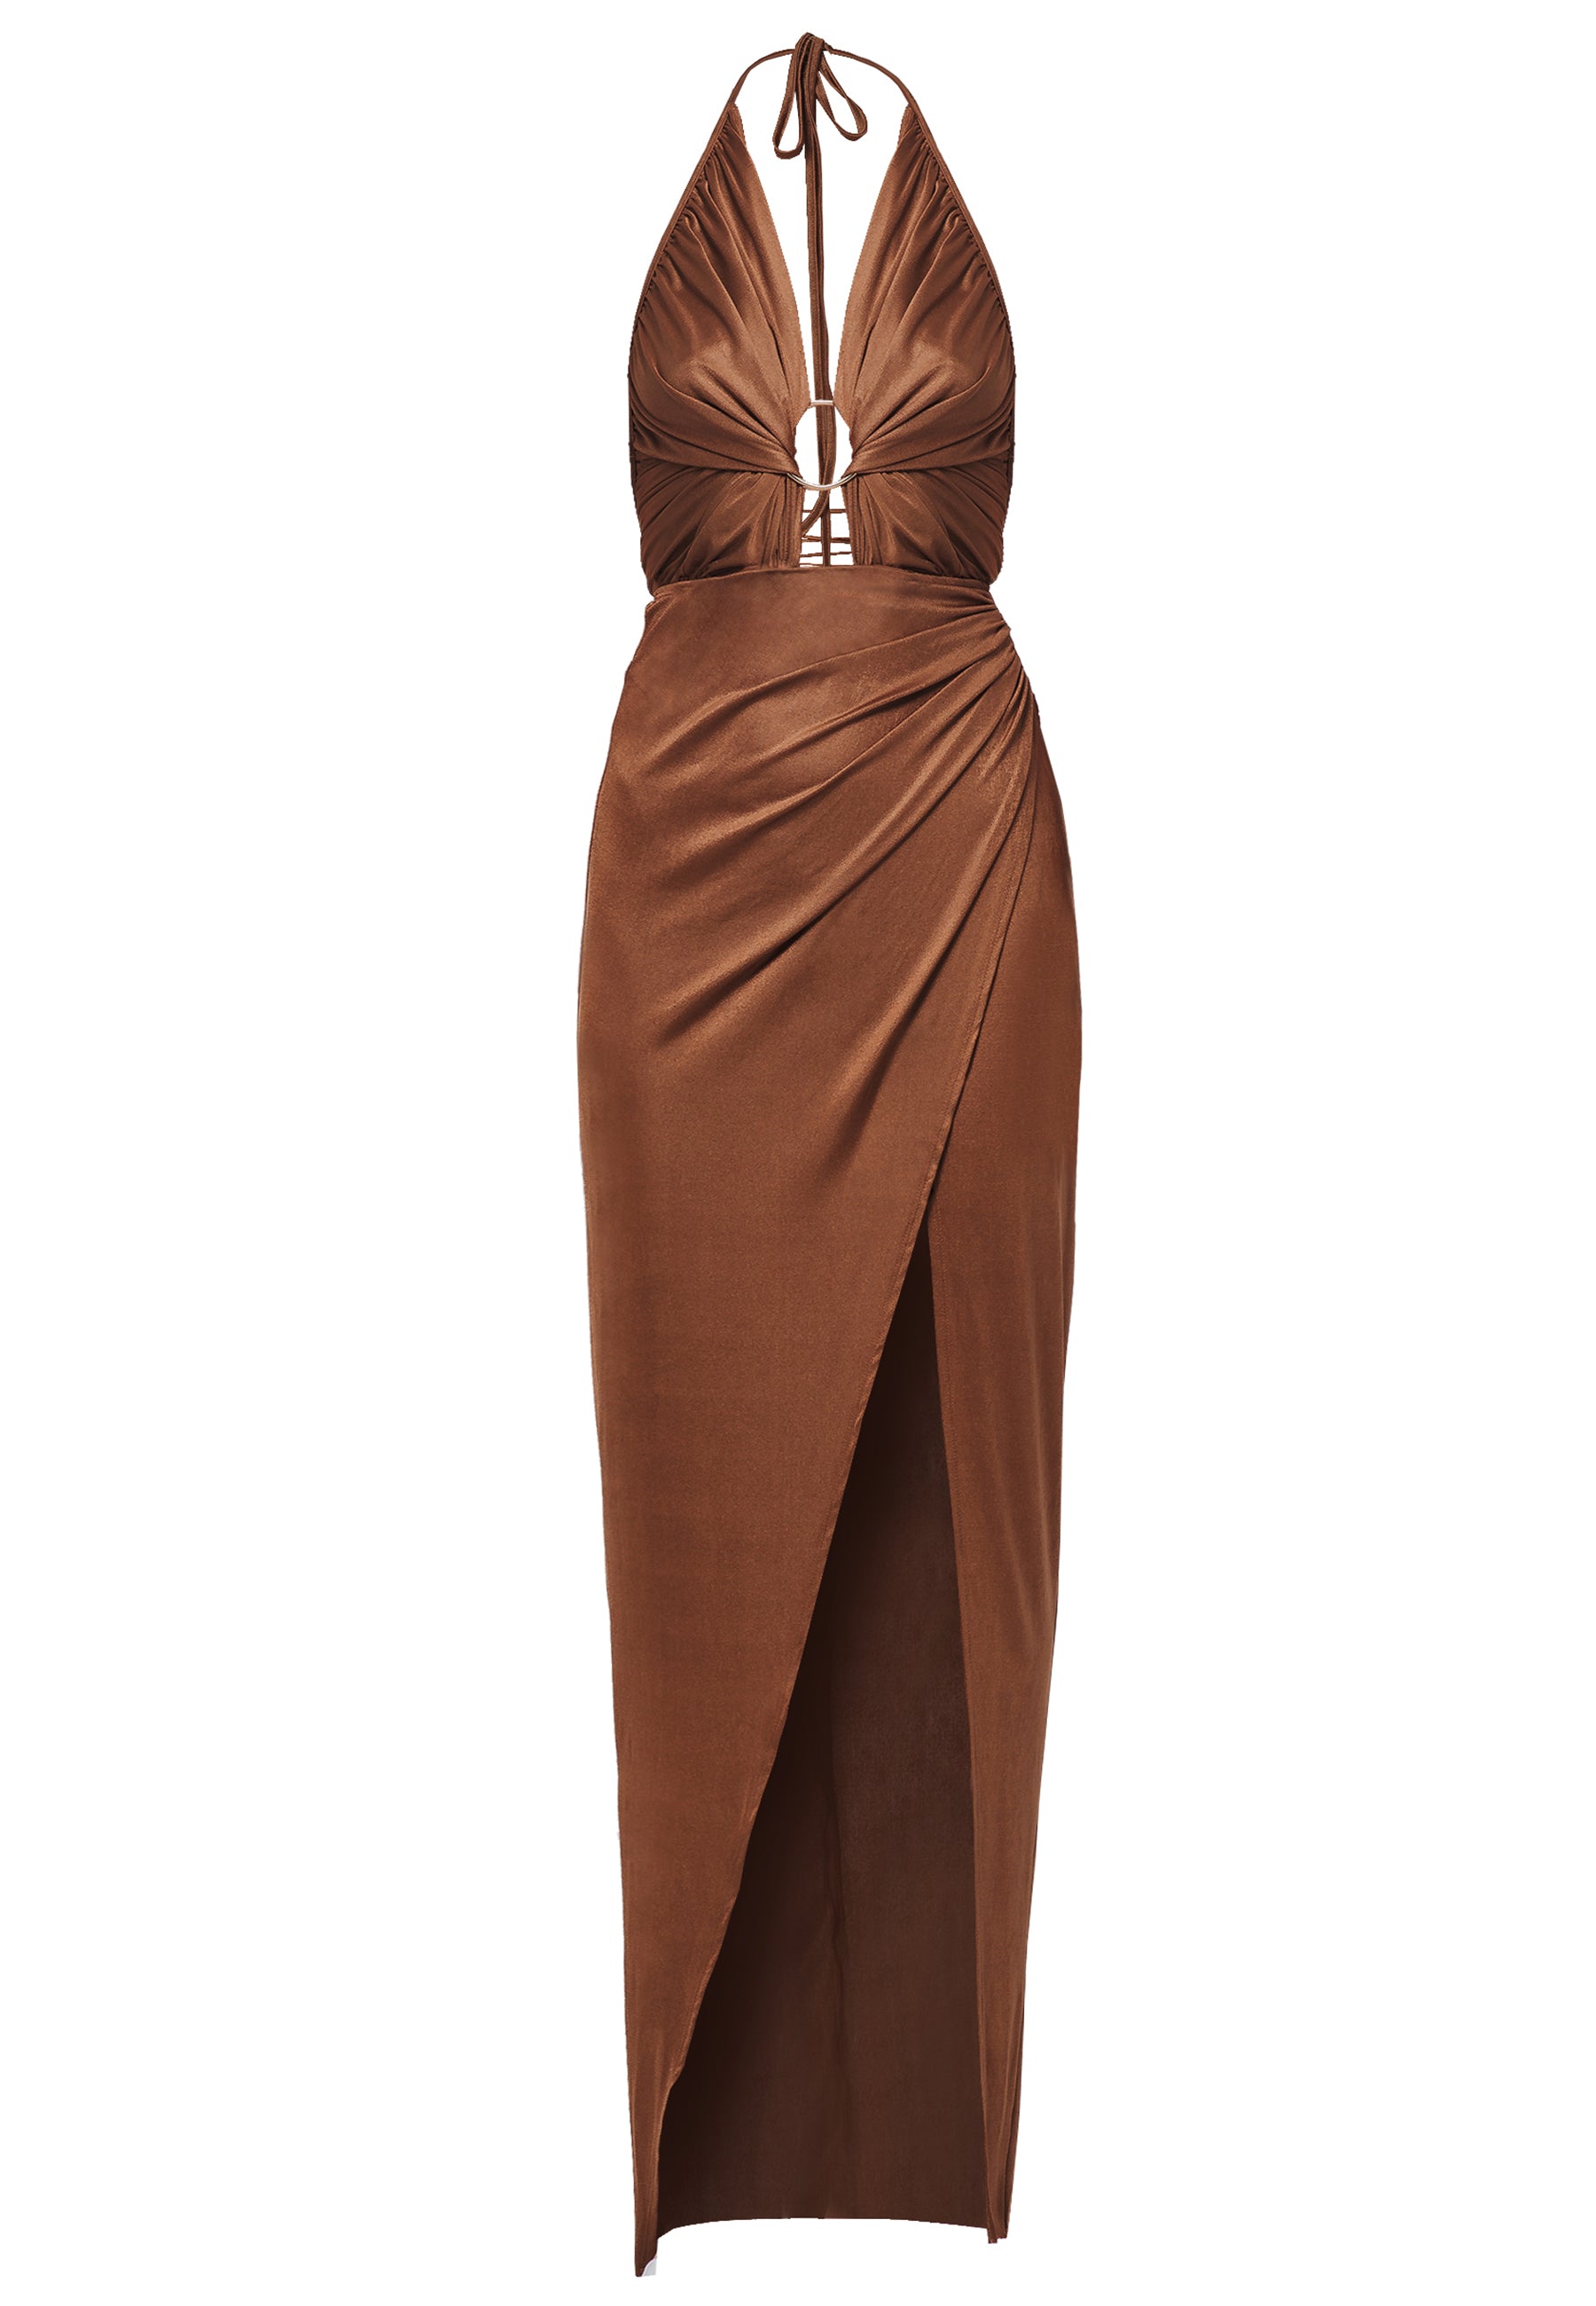 Women’s Gold / Brown Selena Dress Cognac - Brown Extra Small Sax35Th by Alicja Czarniecka